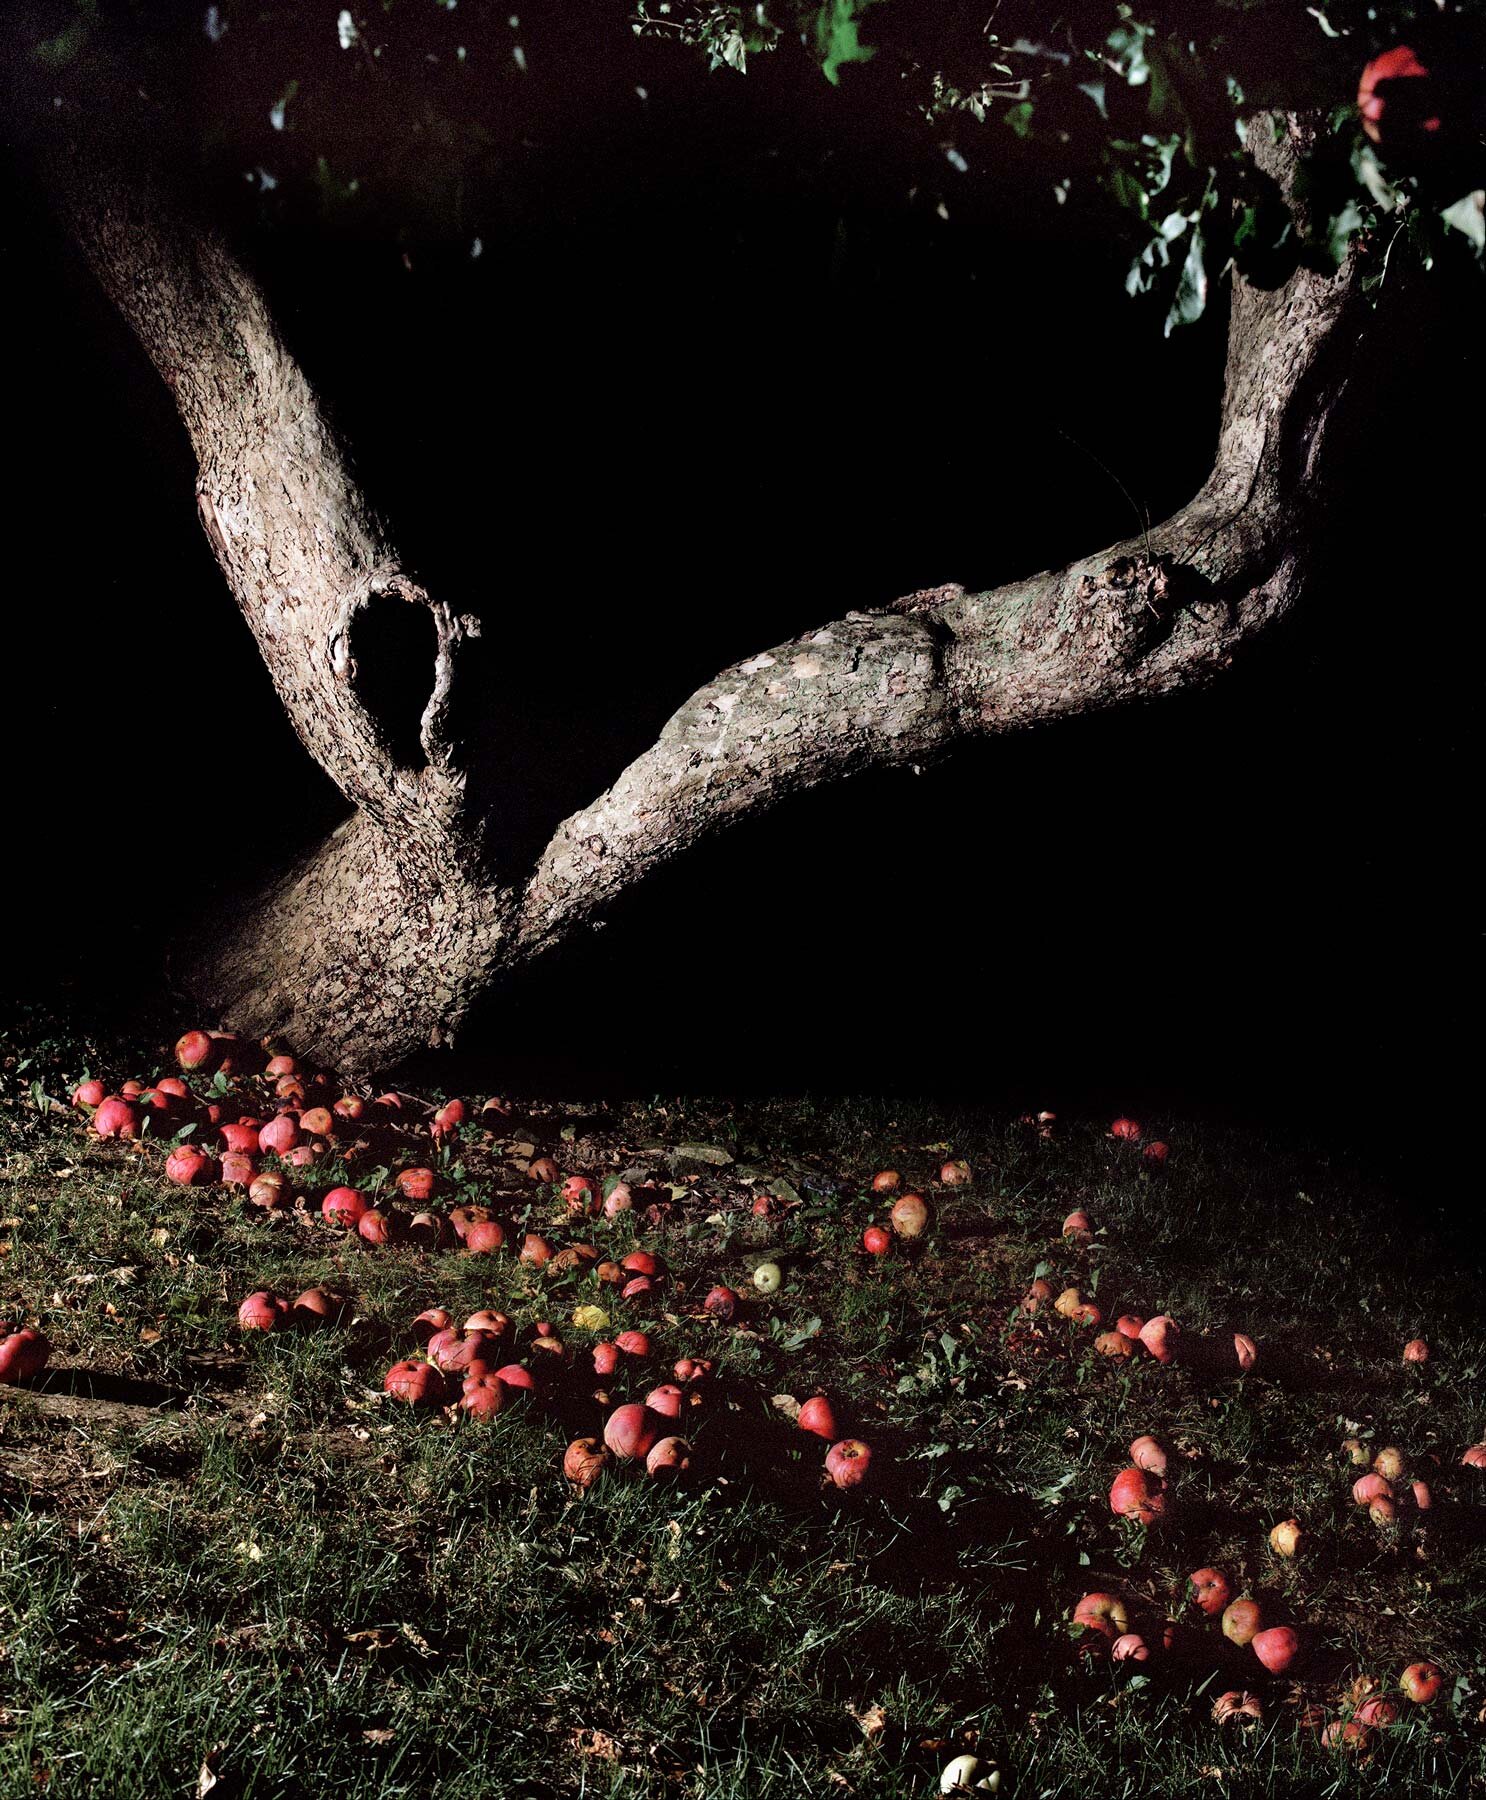 Jocelyn Lee archival pigment print, Apple Tree at Night , 2016.